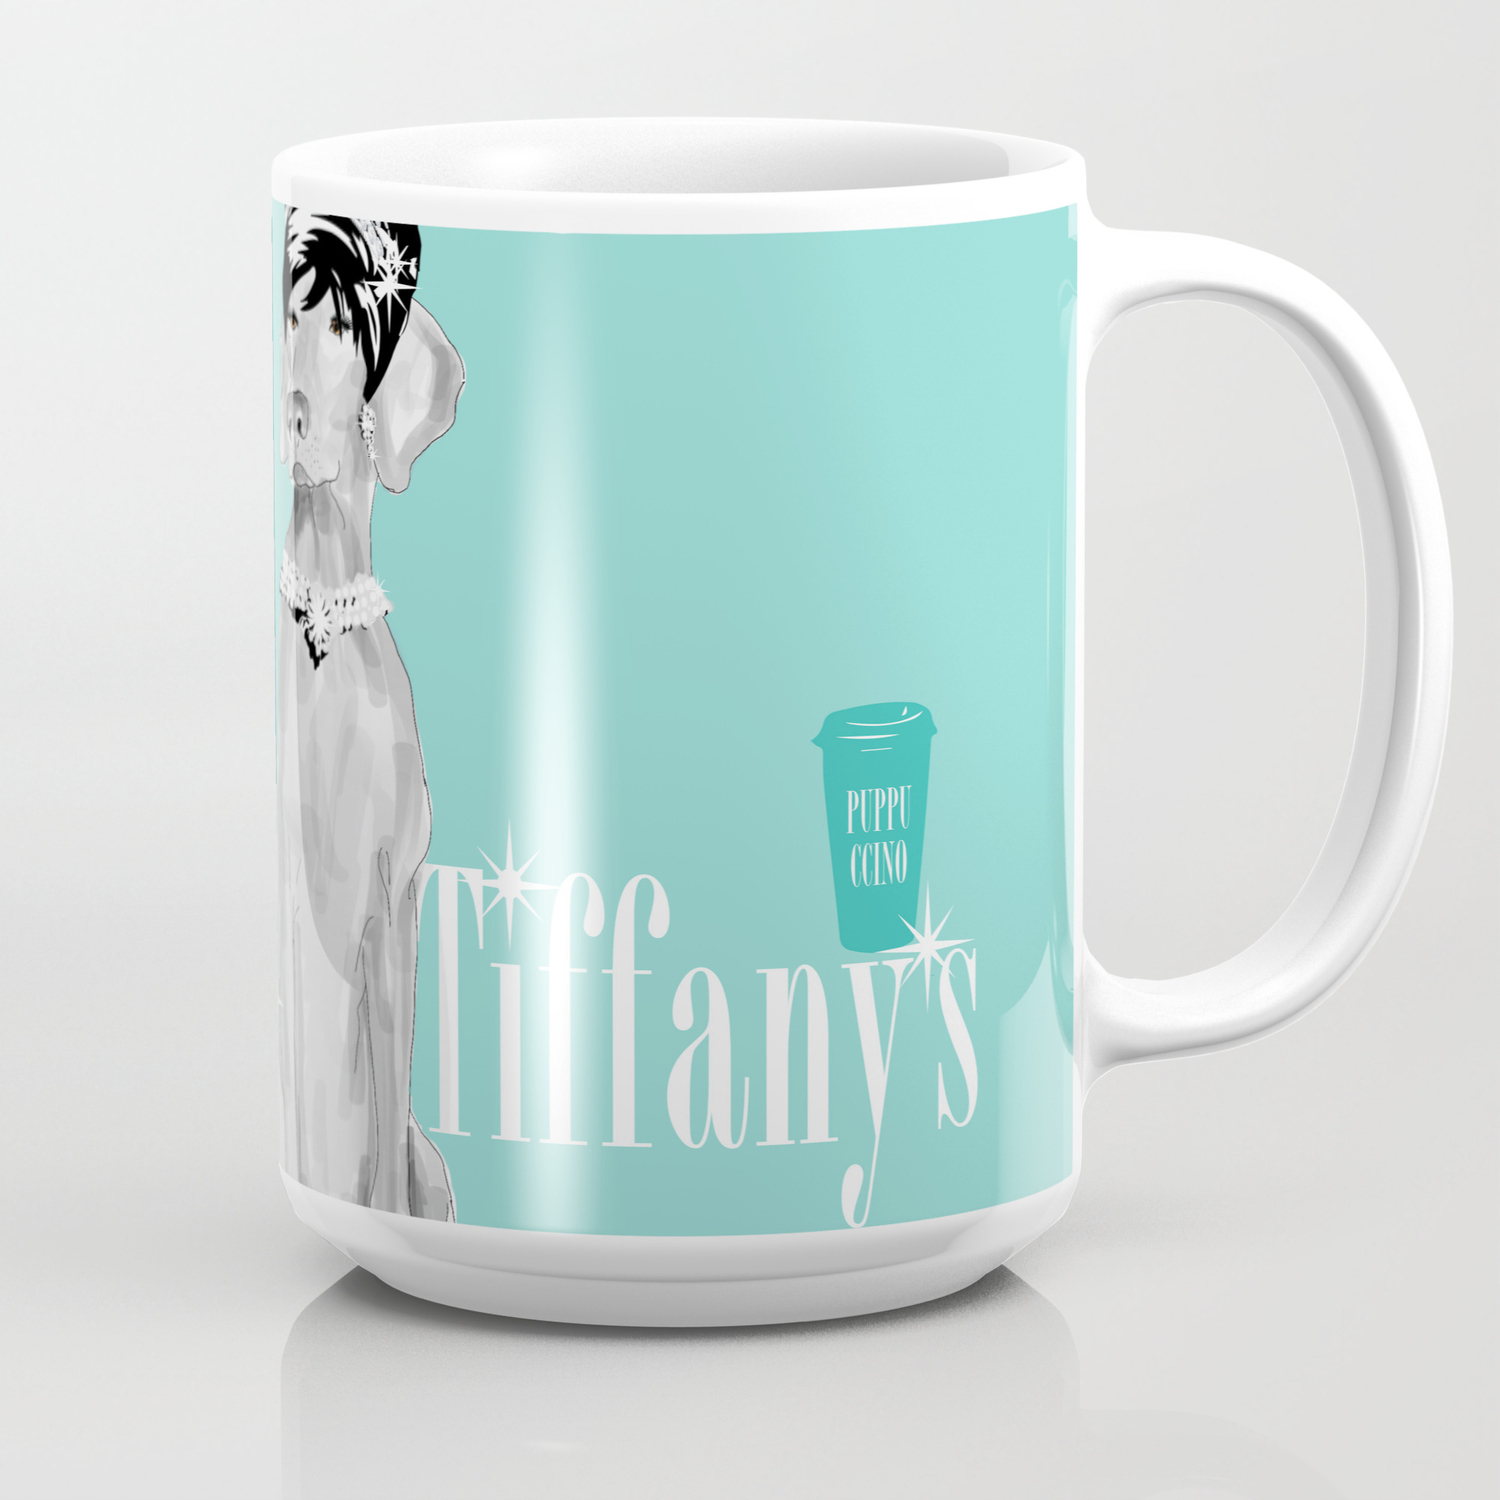 tiffany coffee mugs